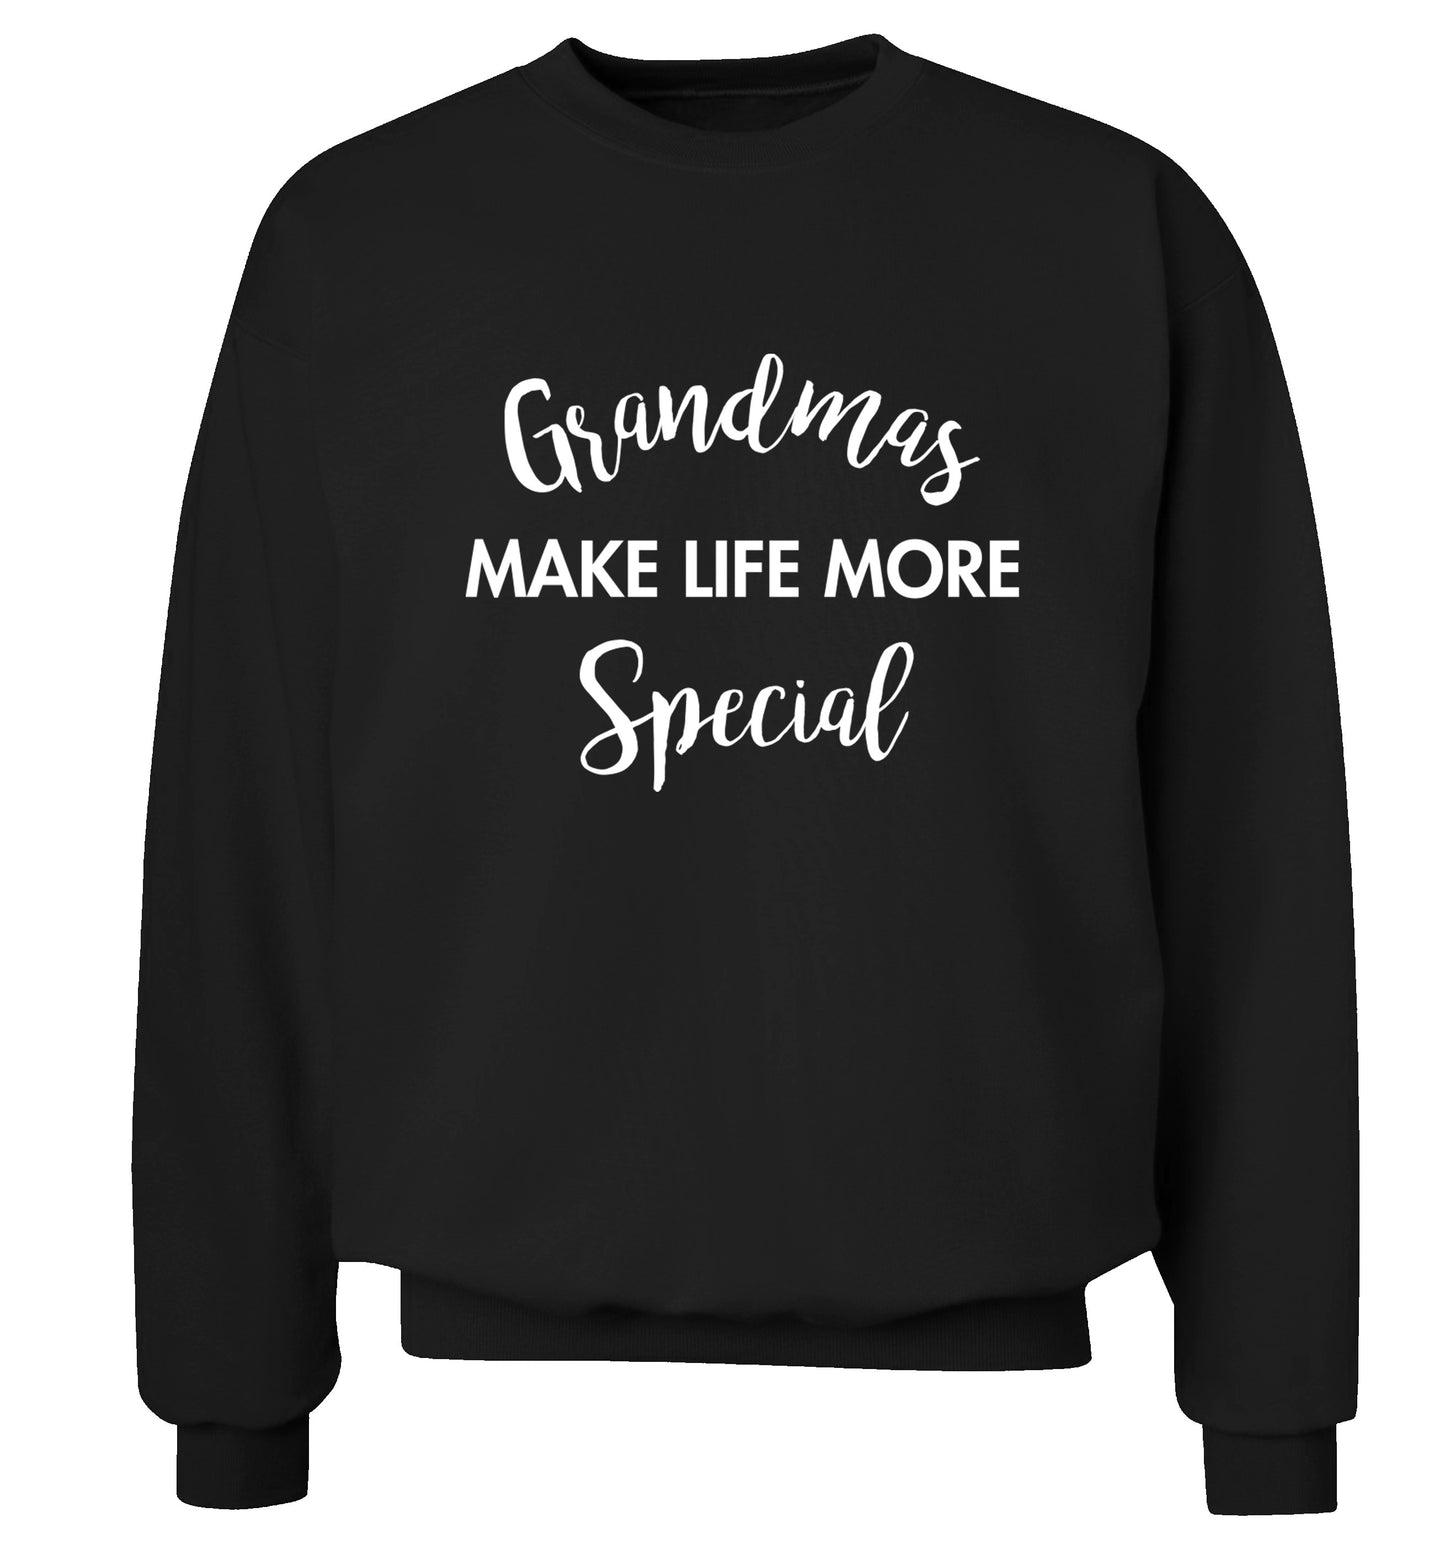 Grandmas make life more special Adult's unisex black Sweater 2XL